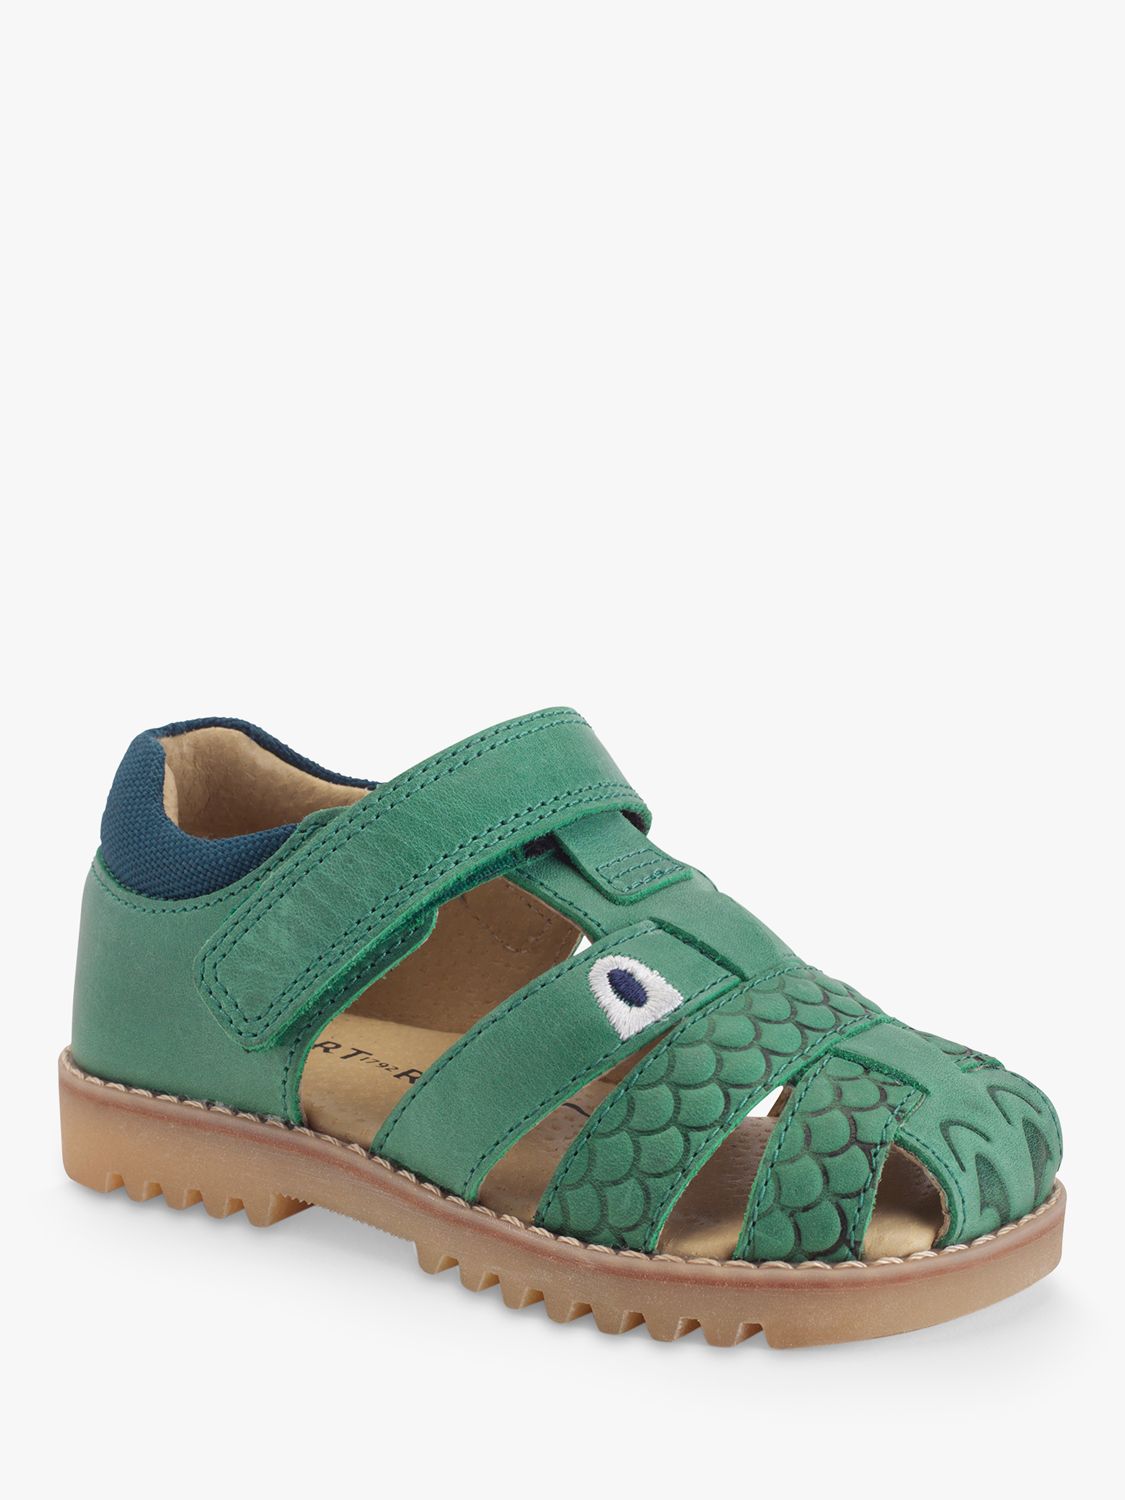 Start-Rite Kids' Leather Dino Park Sandals, Green, 20